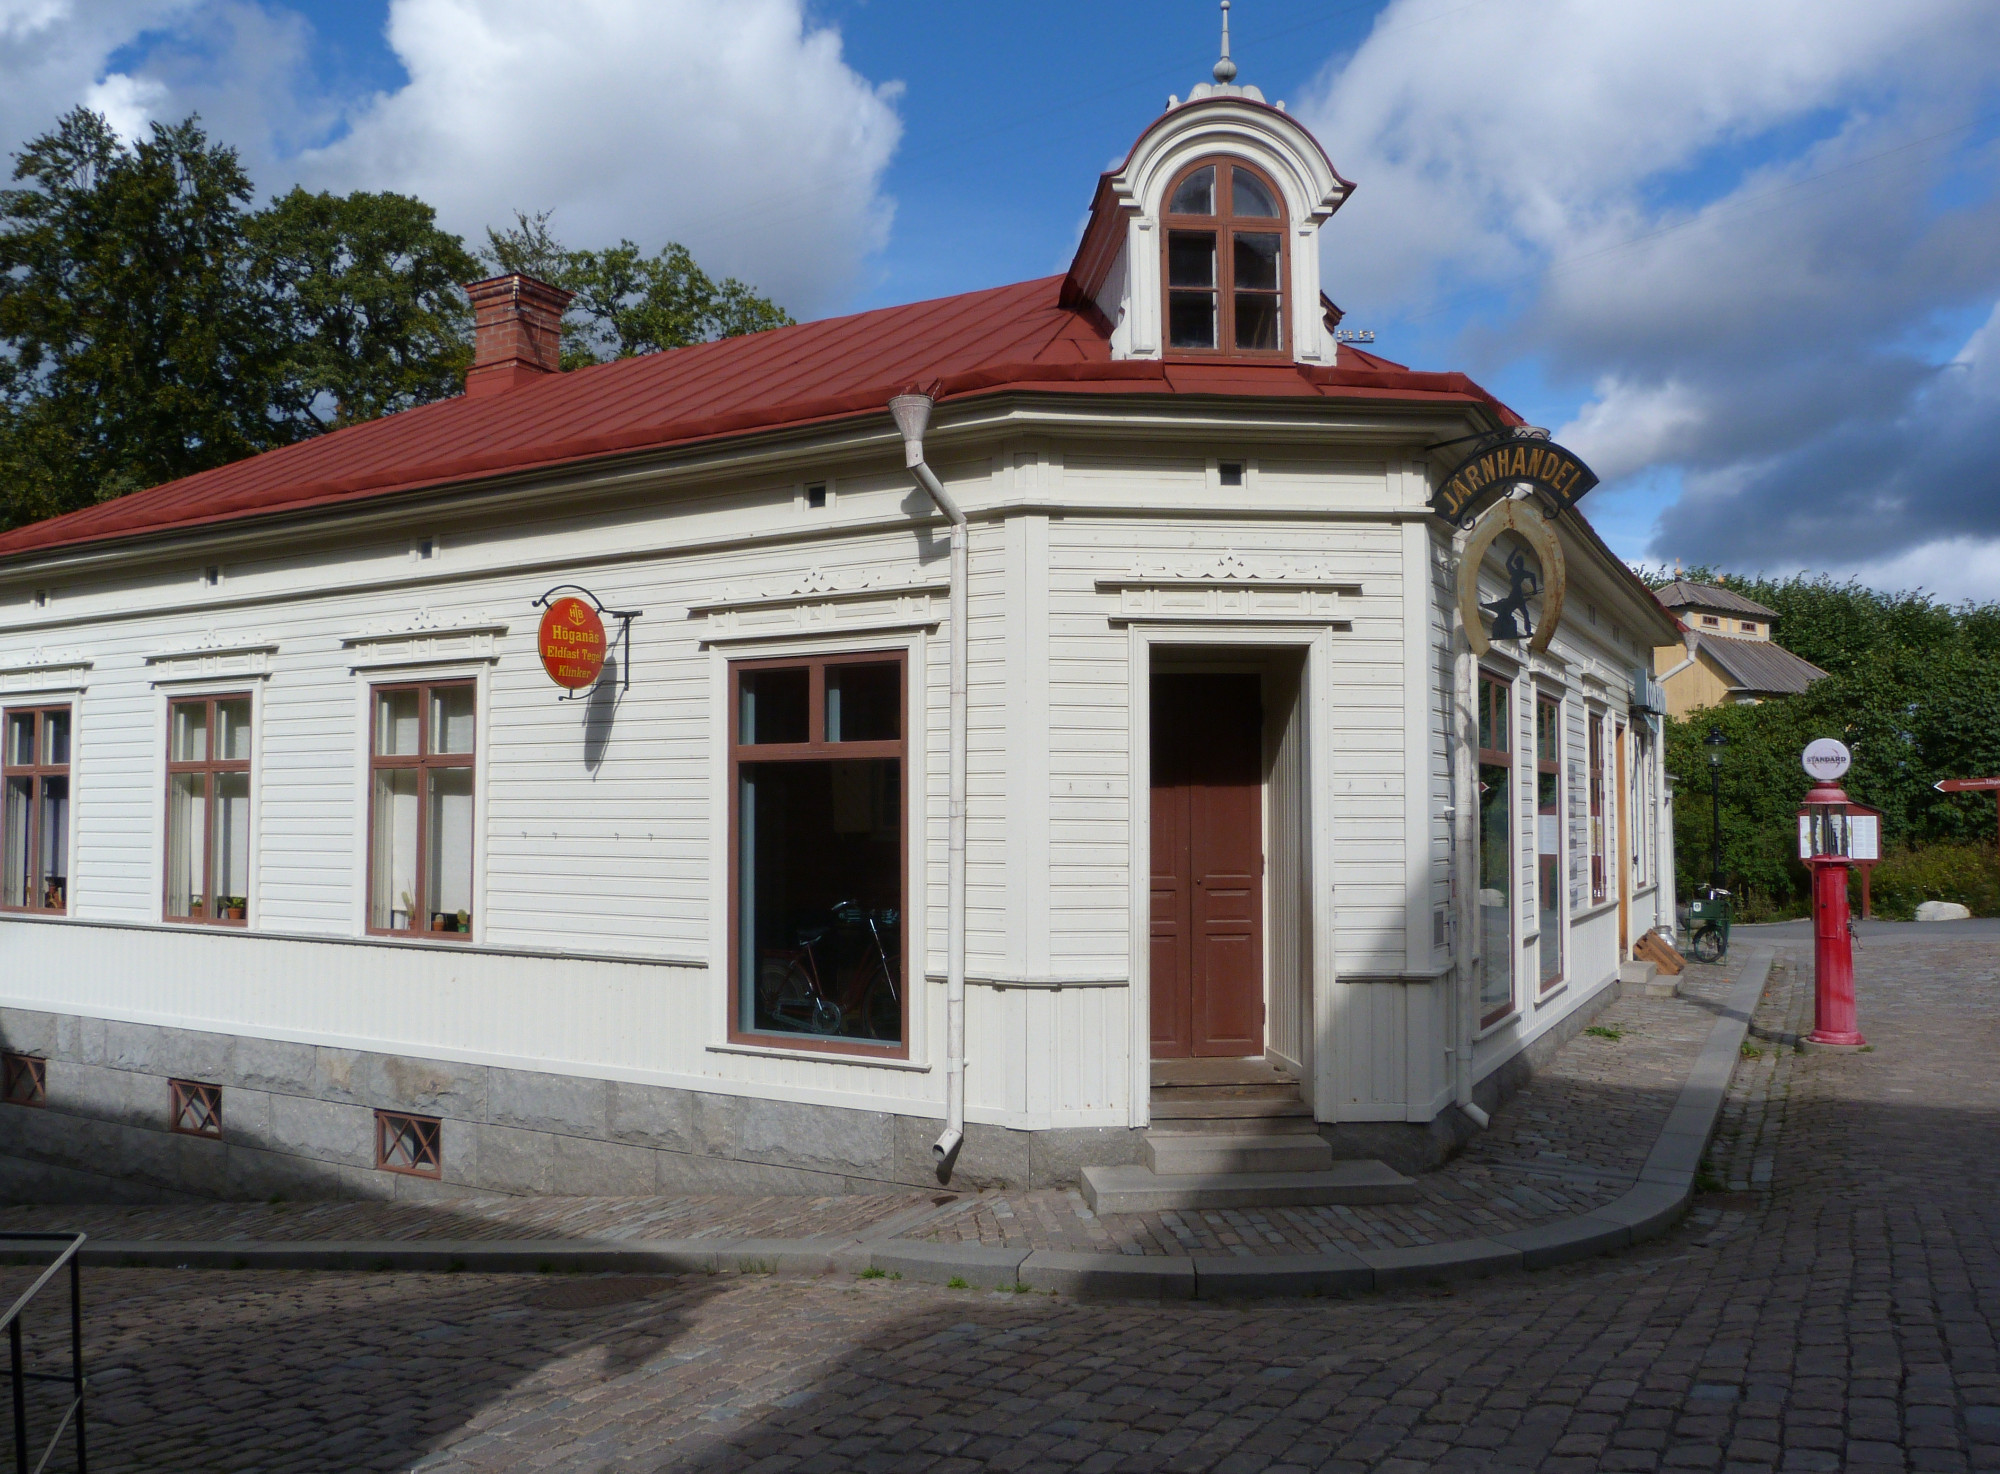 Jarnhandel (ironmongers store